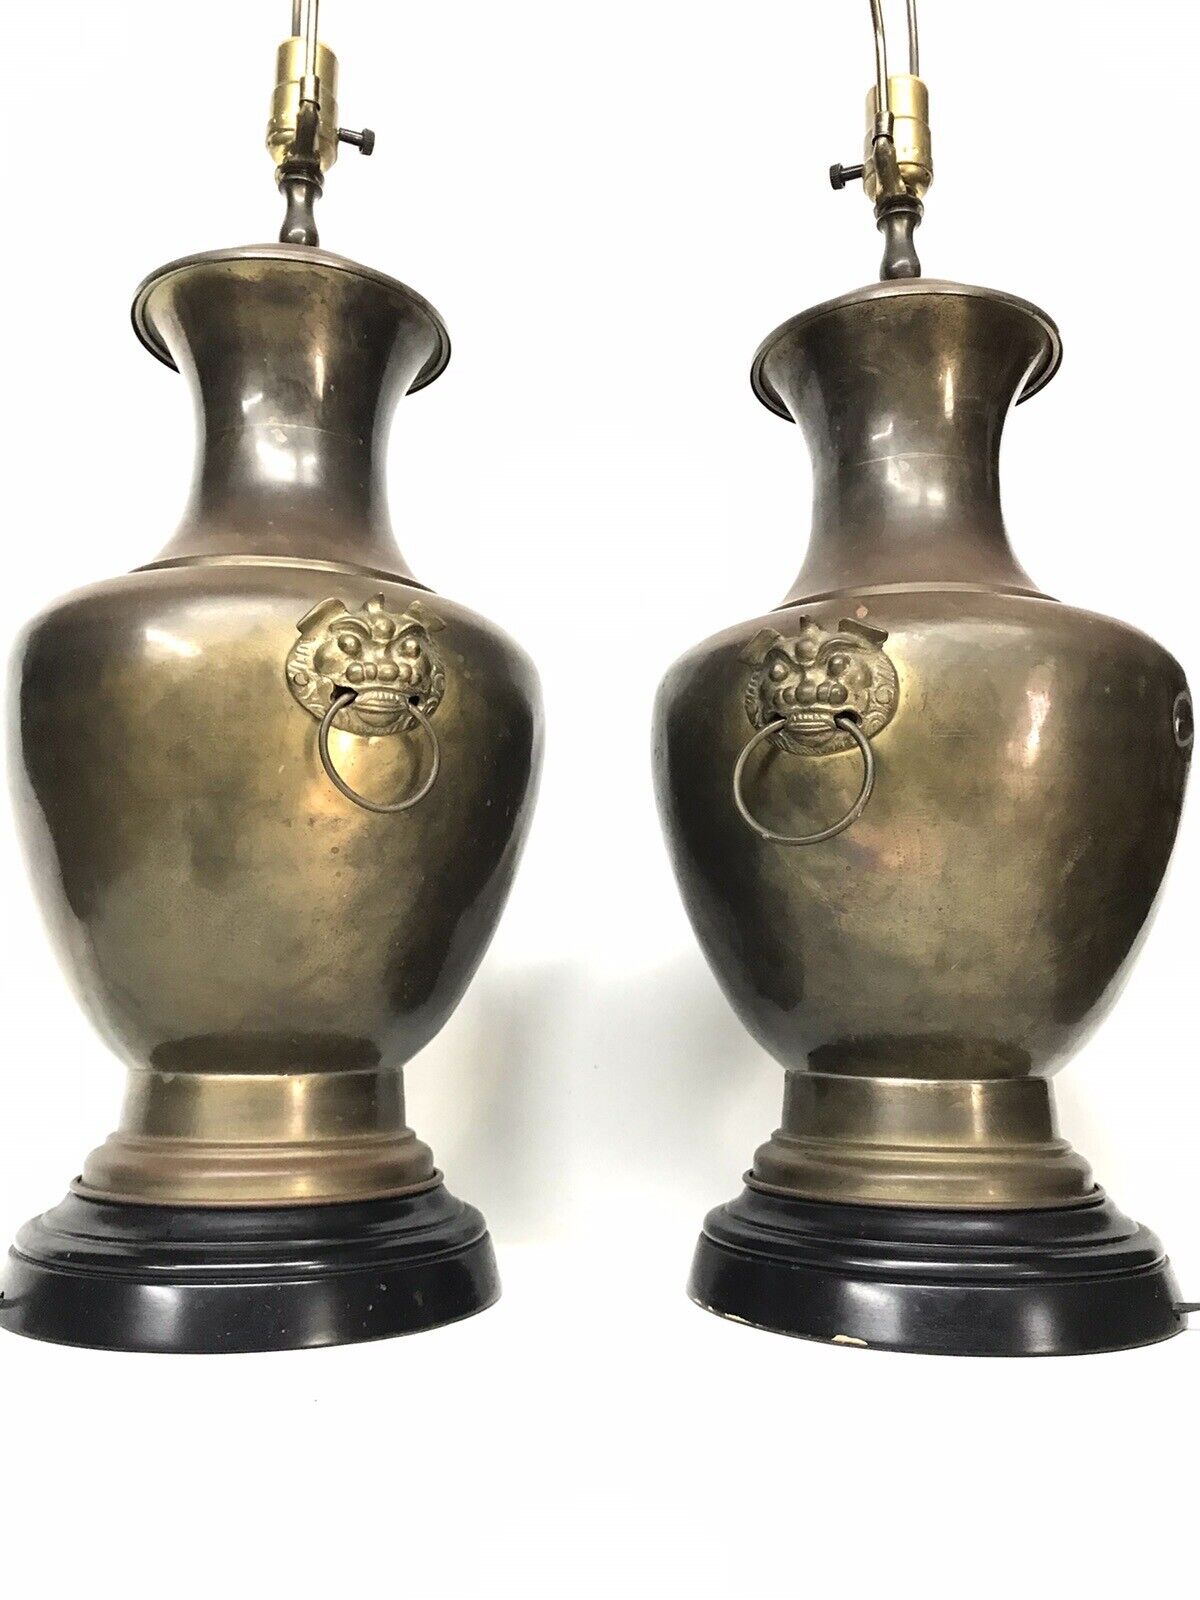 2 ANCIENT CHINA LAMPS Foo Dog GINGER JAR Lion Rings Brass Pair Vintage WILDWOOD